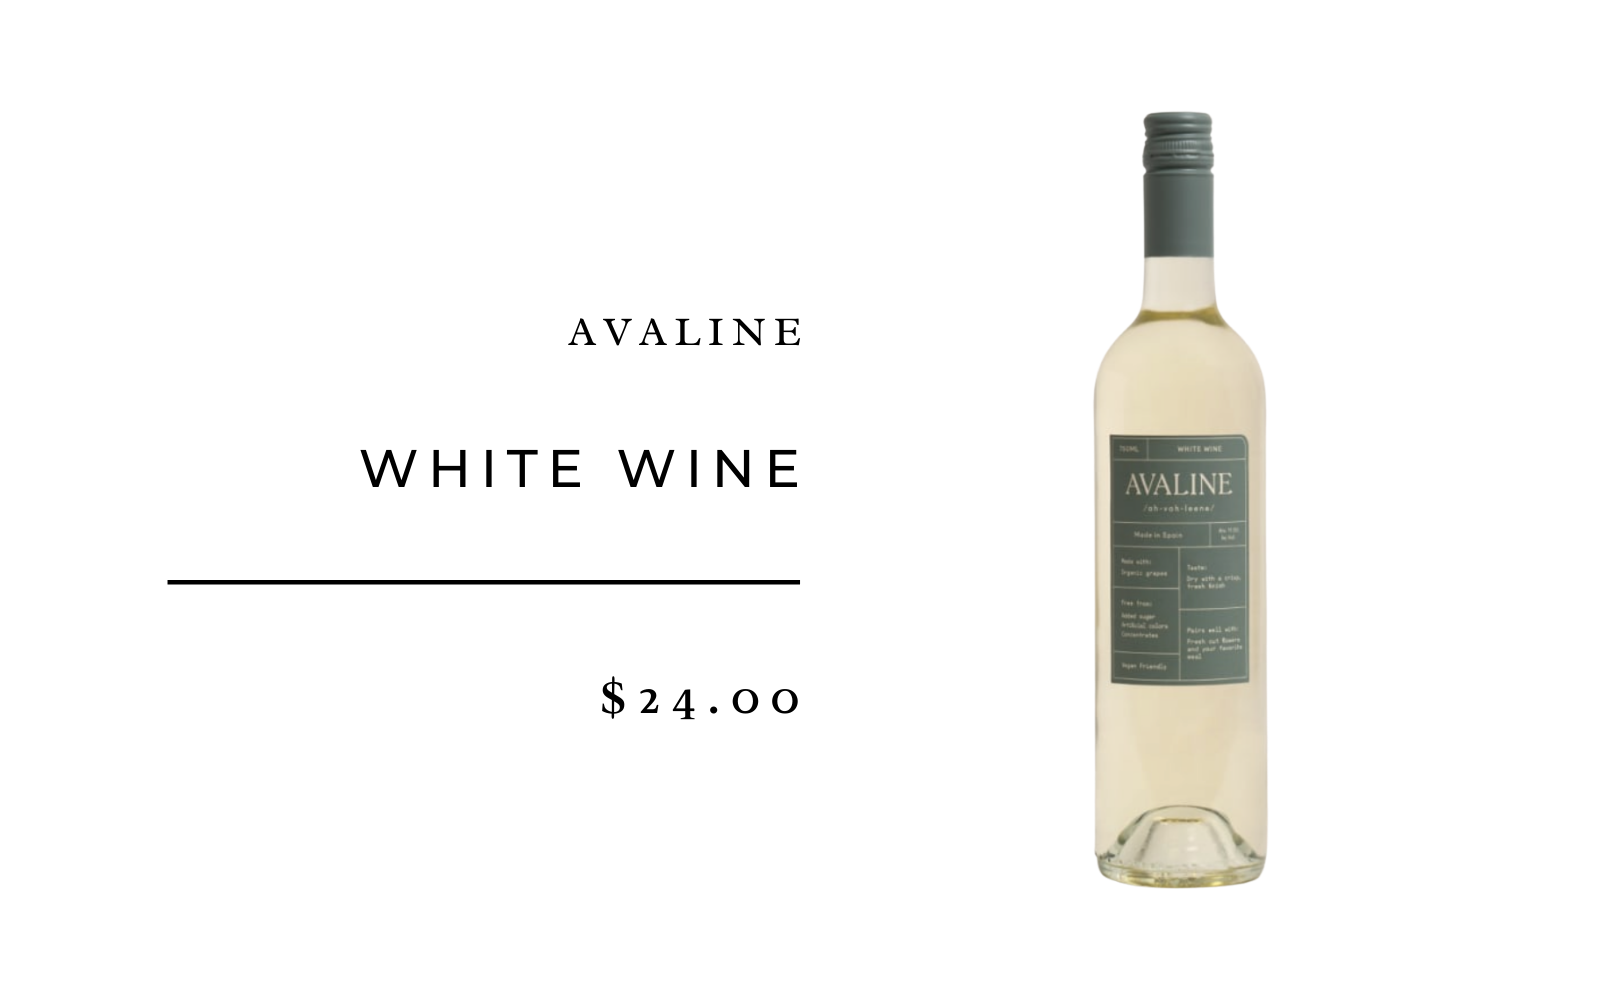 Avaline white wine